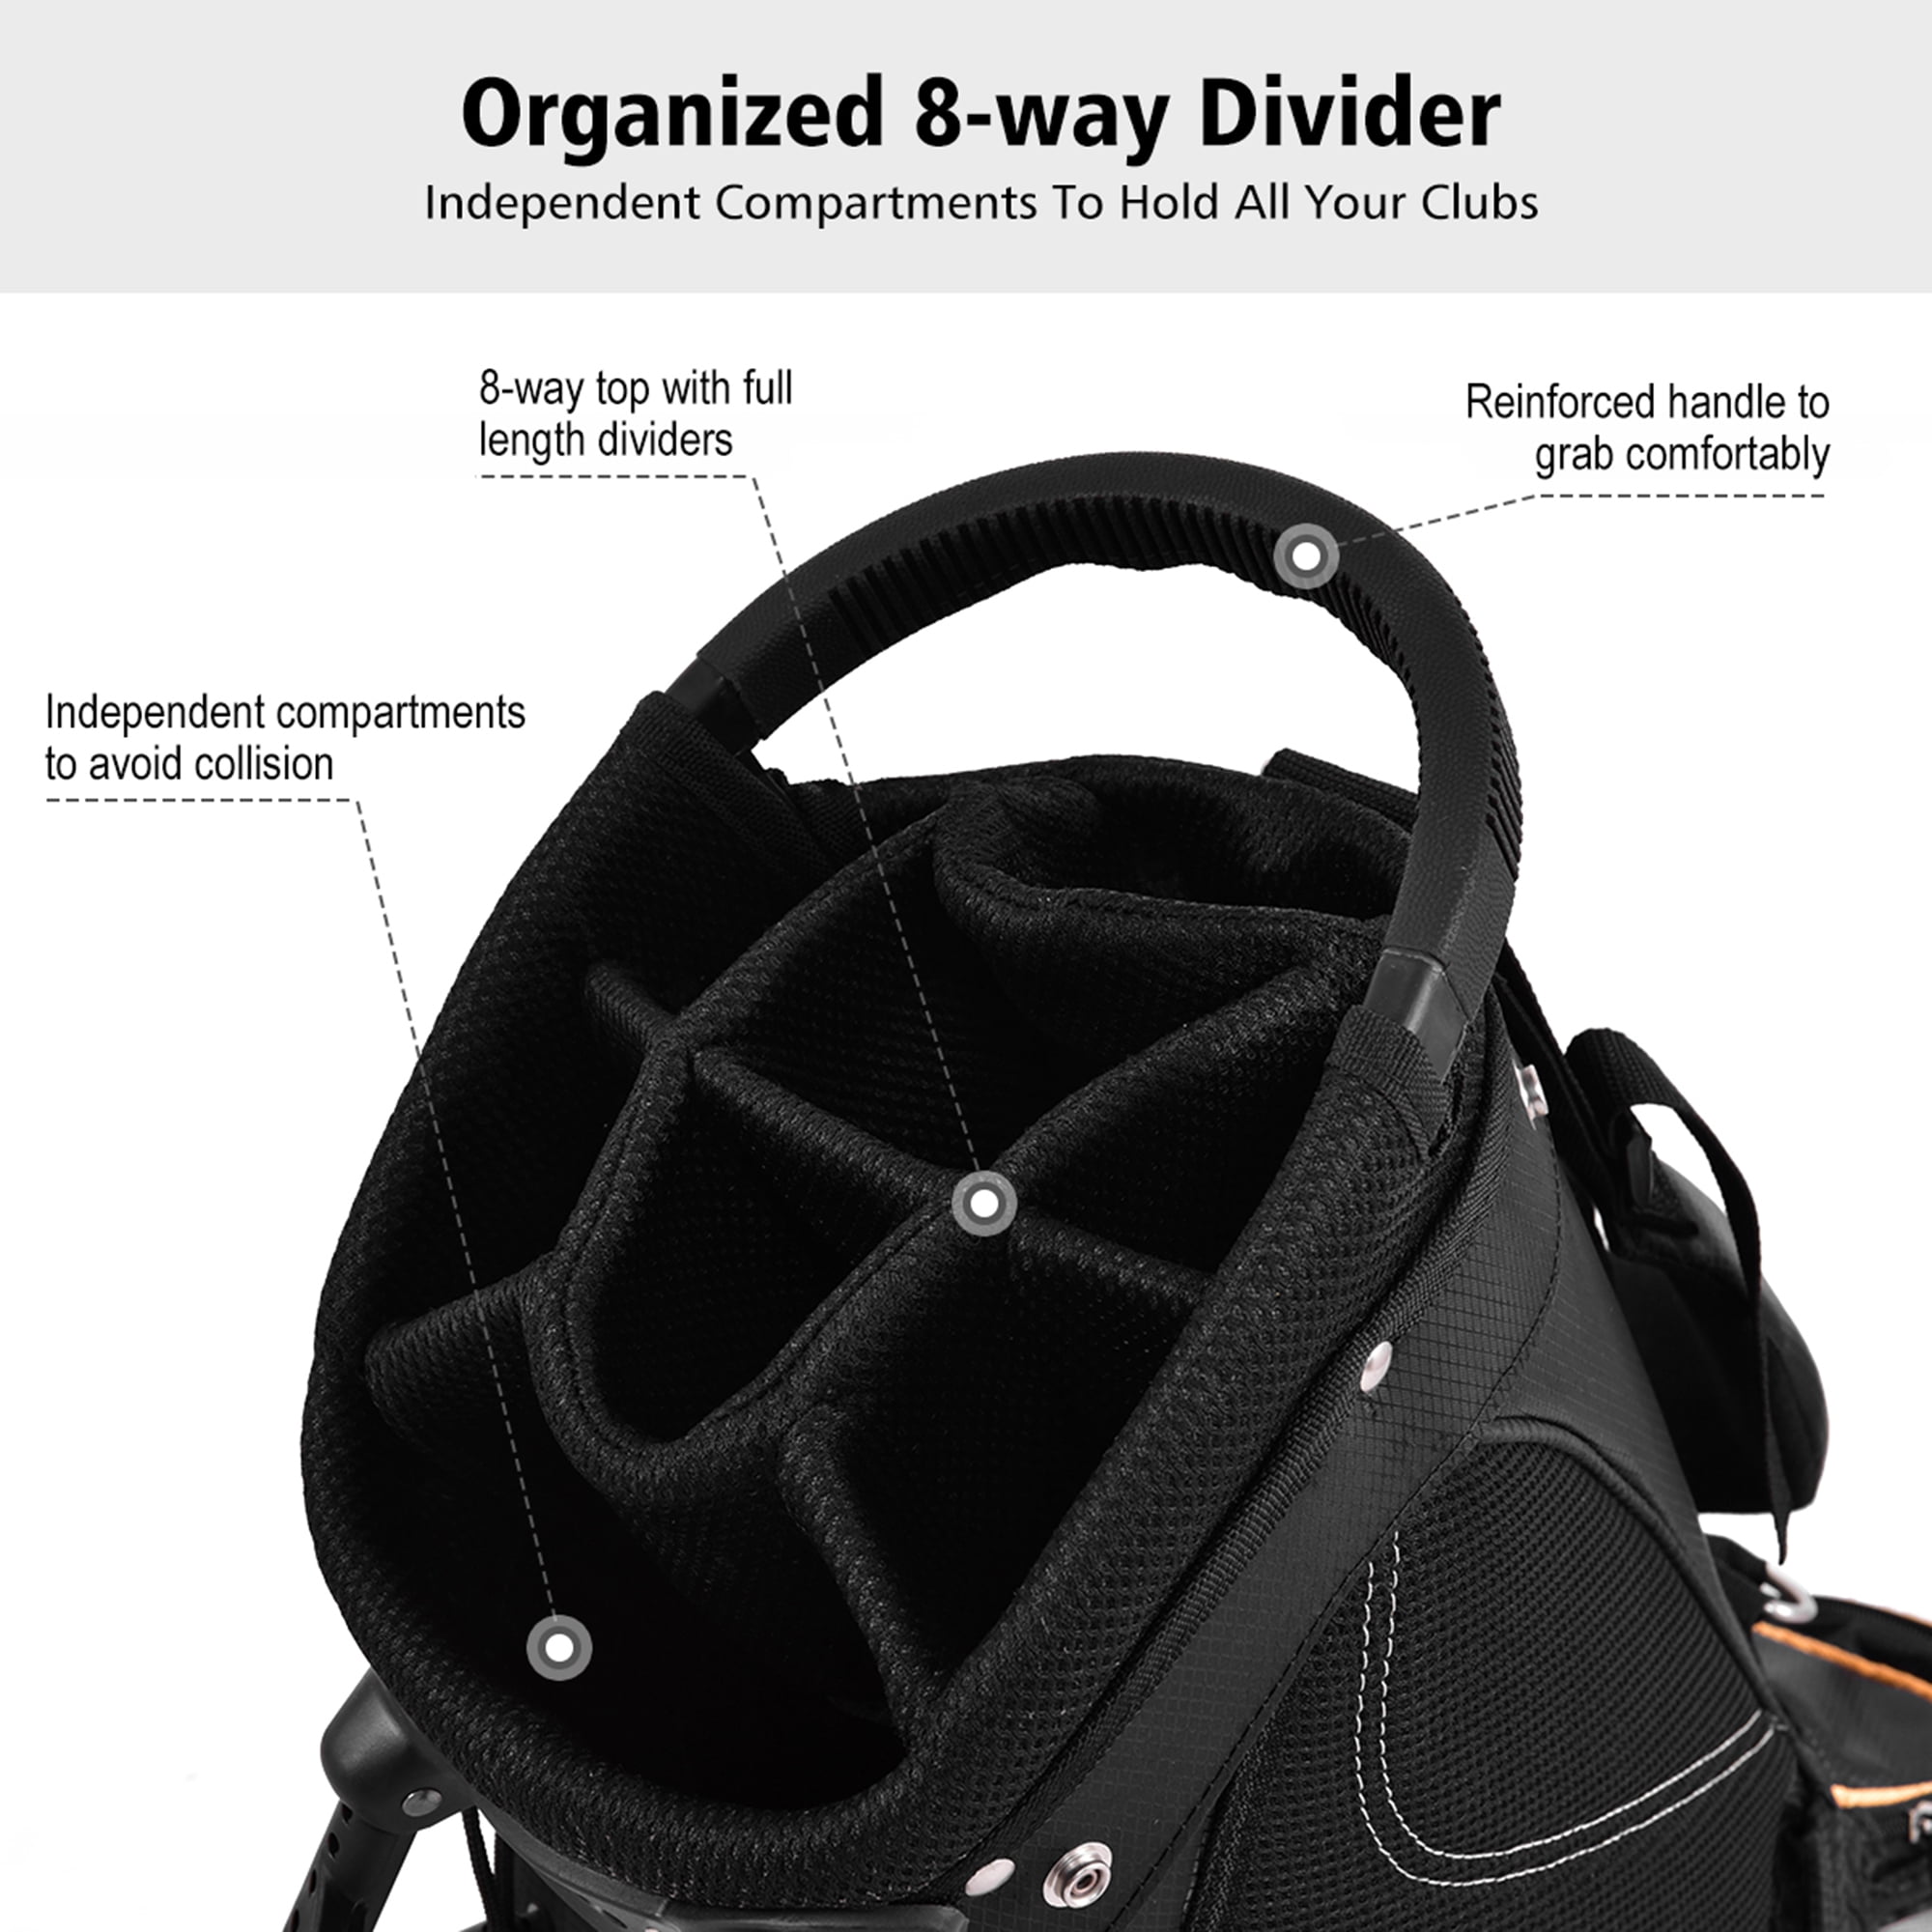 Costway Golf Stand Cart Bag Club w/6 Way Divider Carry Organizer